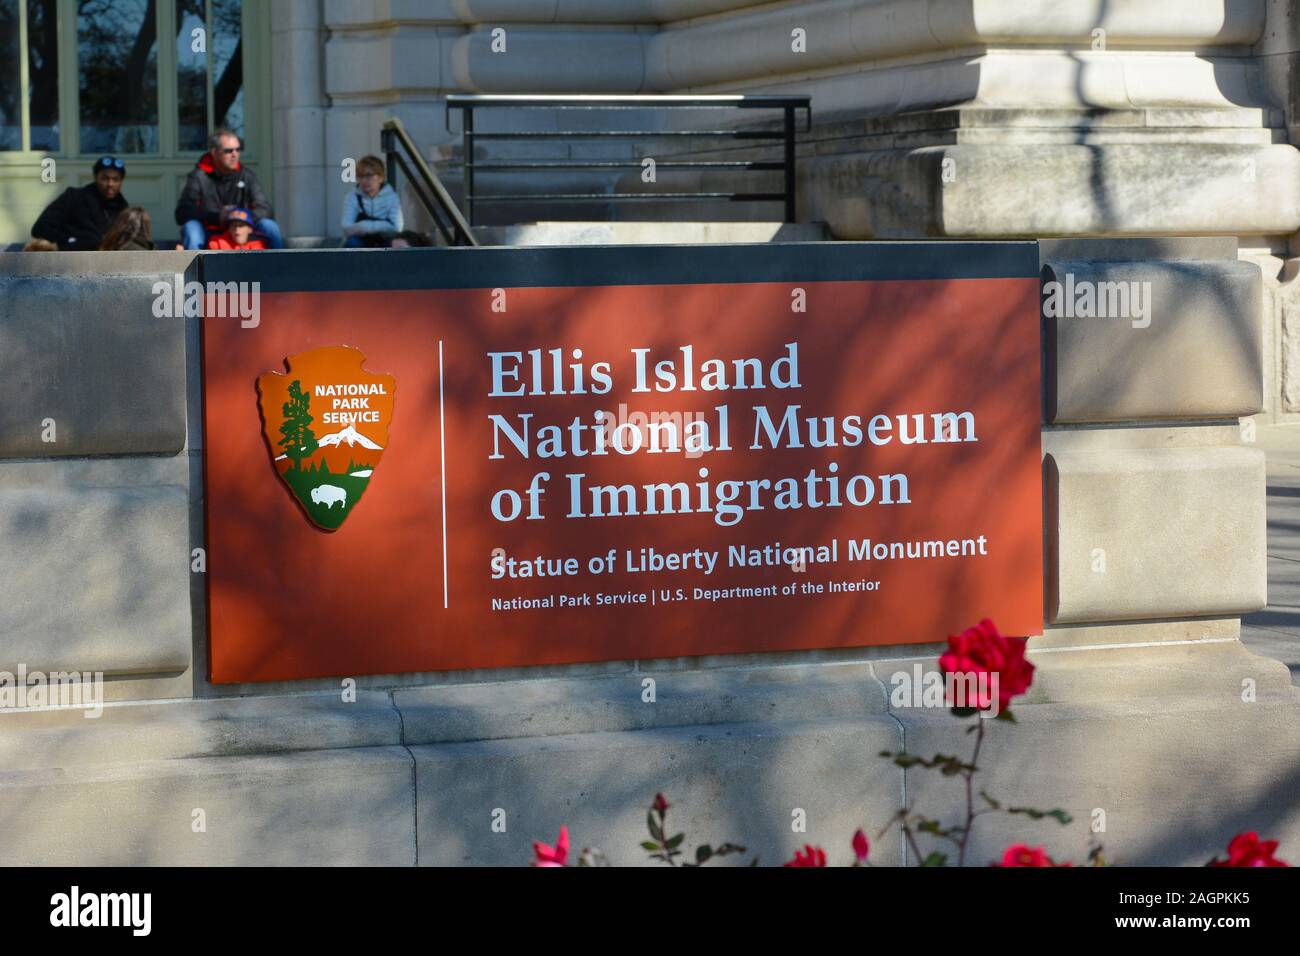 NEW YORK, NY - 04. Nov. 2019: Nahaufnahme von dem Schild am Ellis Island Immigration Museum, Statue of Liberty National Monument. Stockfoto